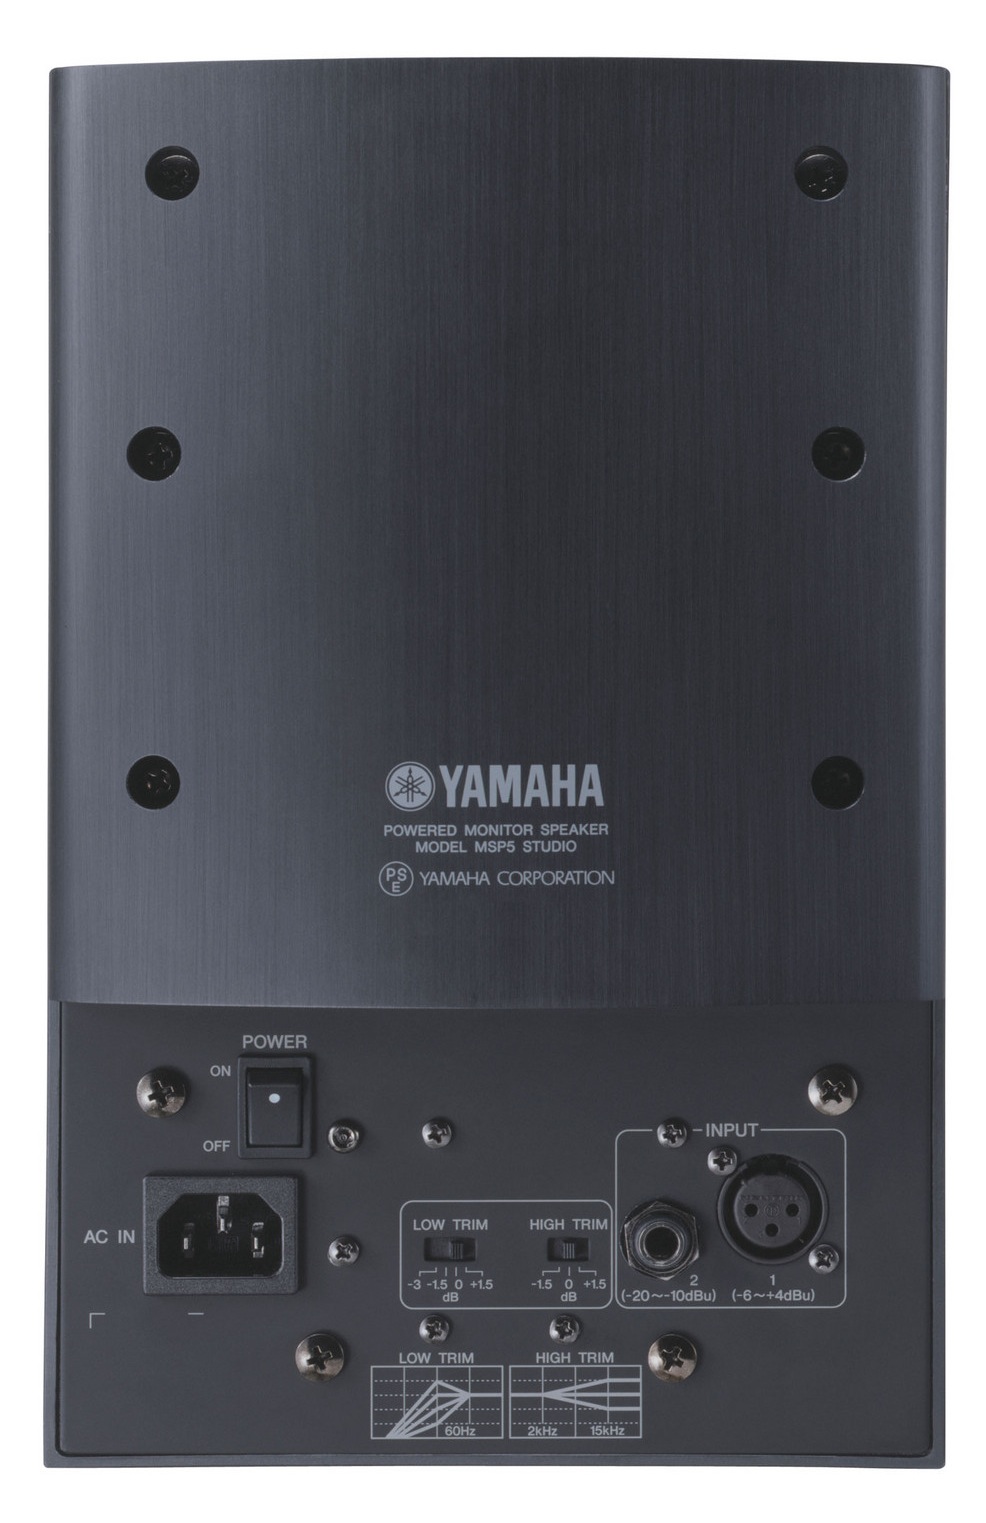 Yamaha MSP5 STUDIO - one piece Active studio monitor